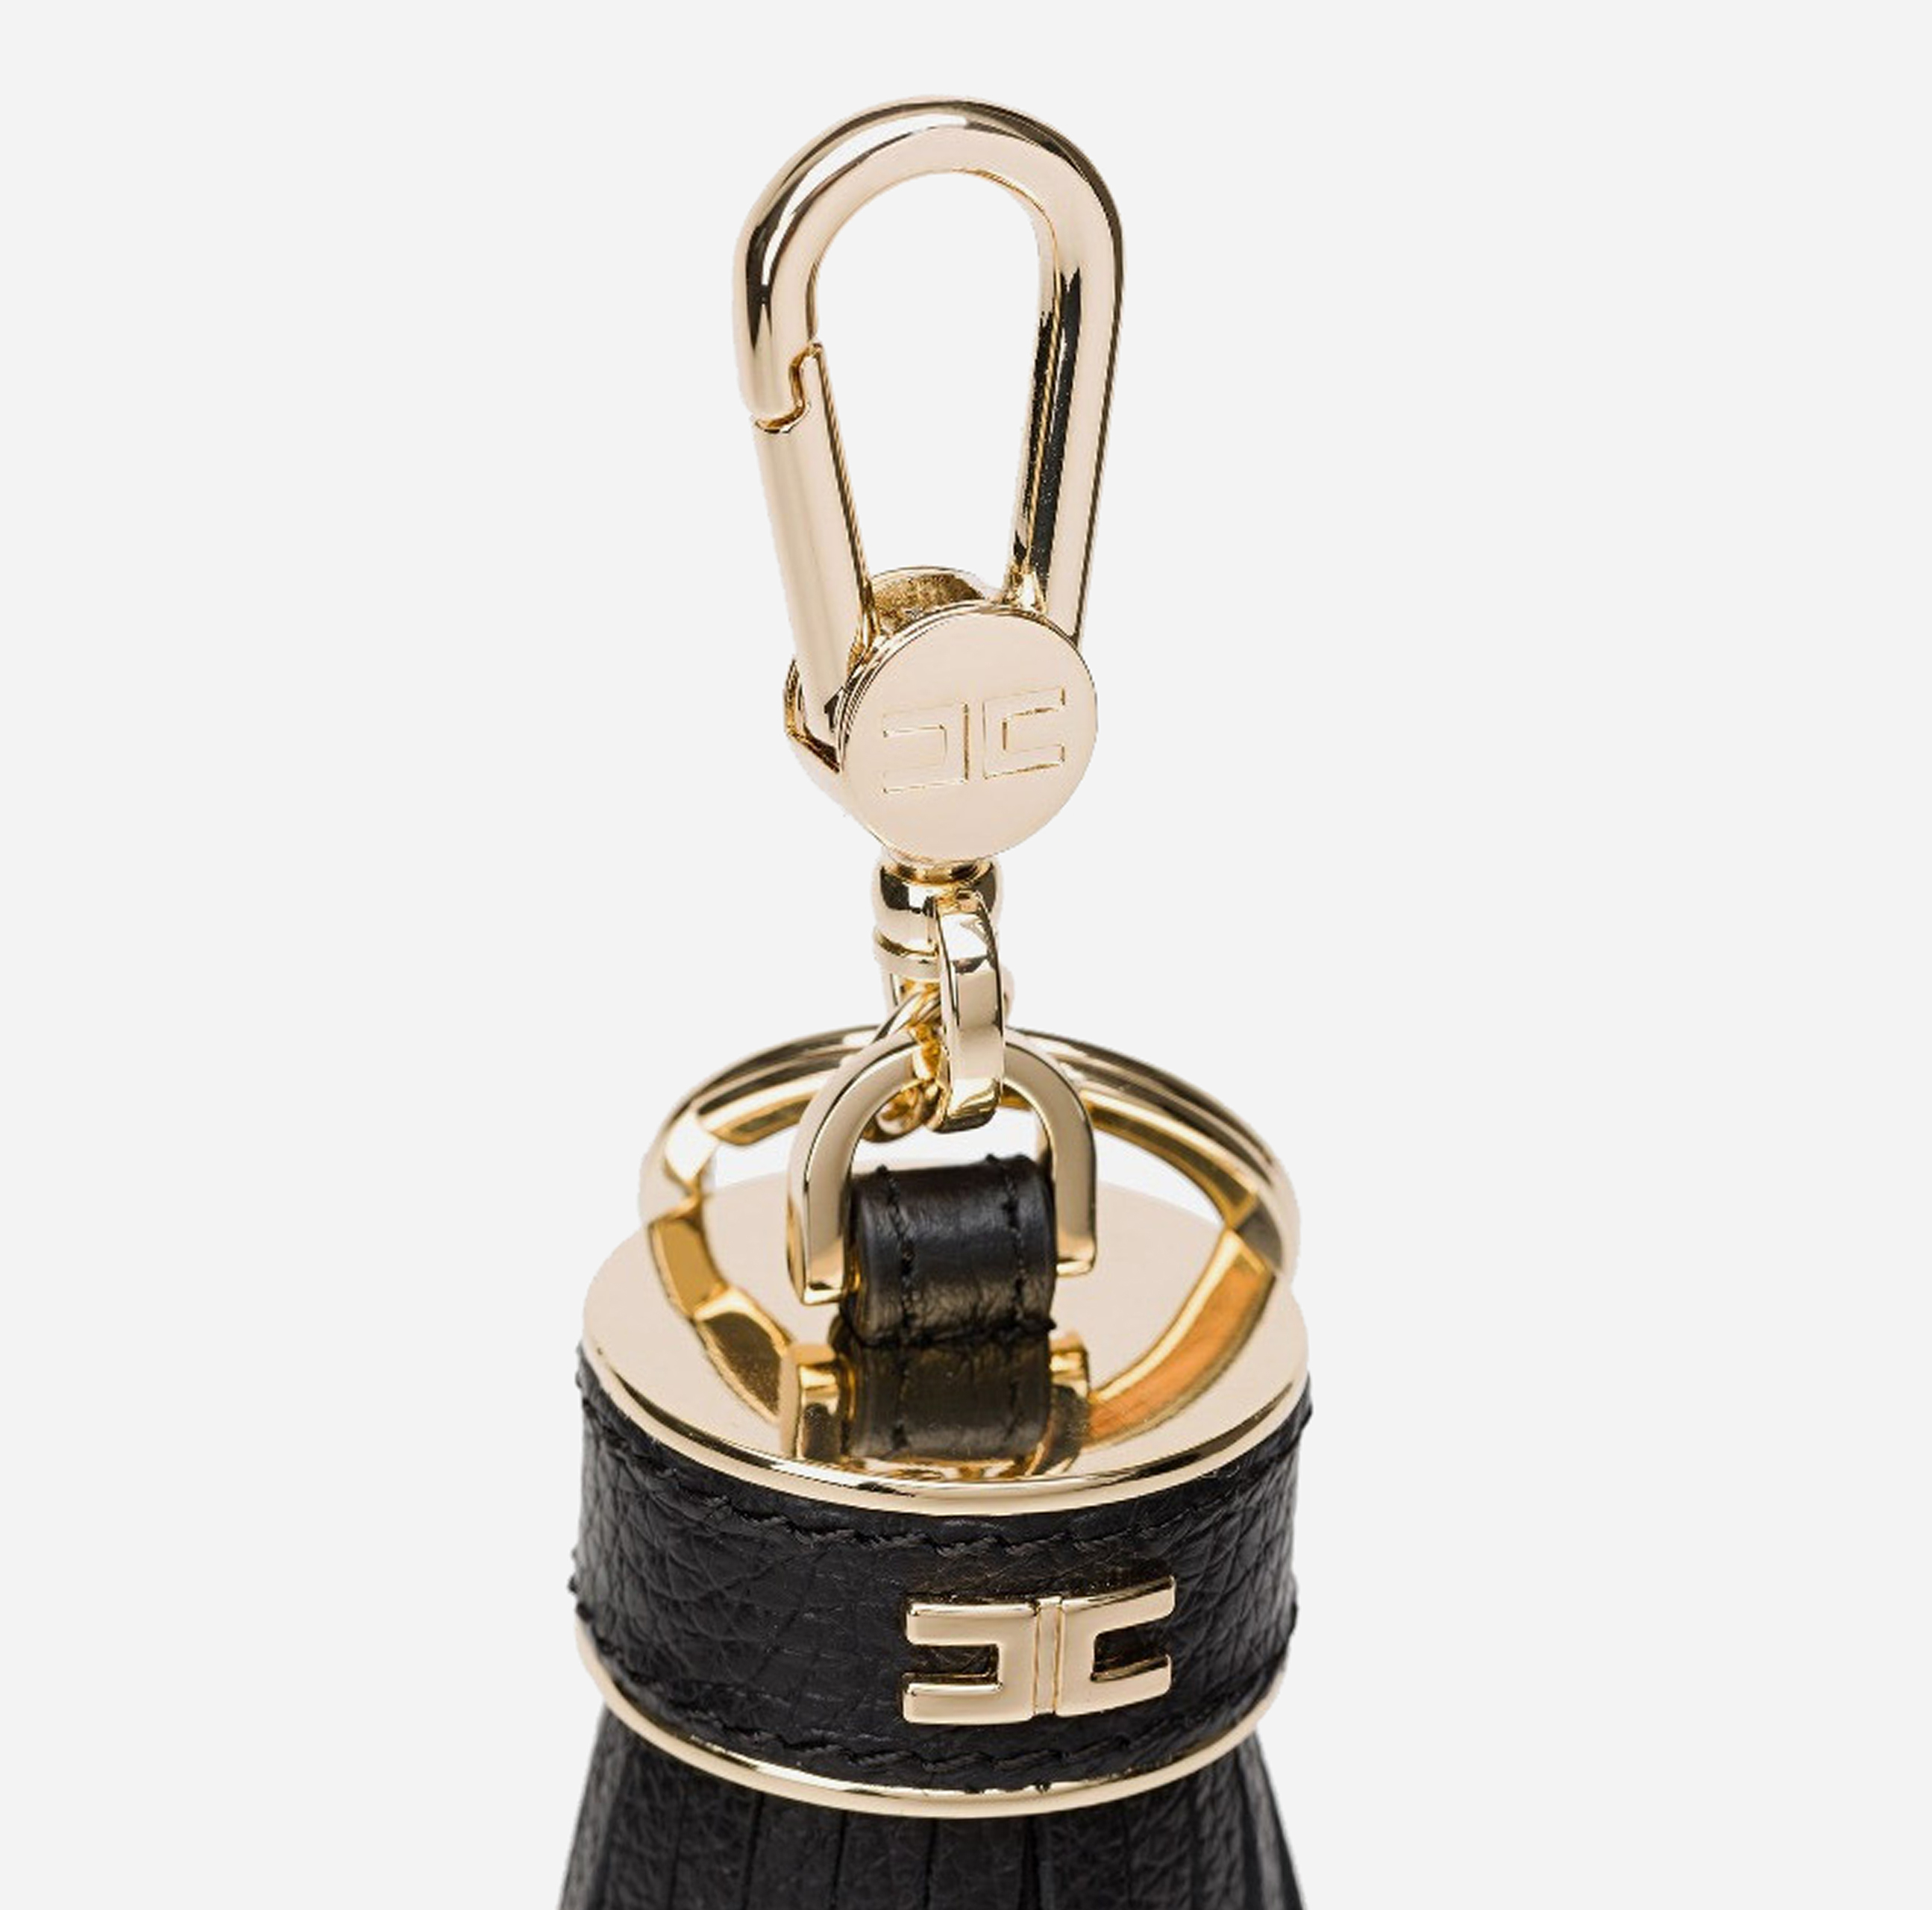 Porte-clés avec logo - Elisabetta Franchi